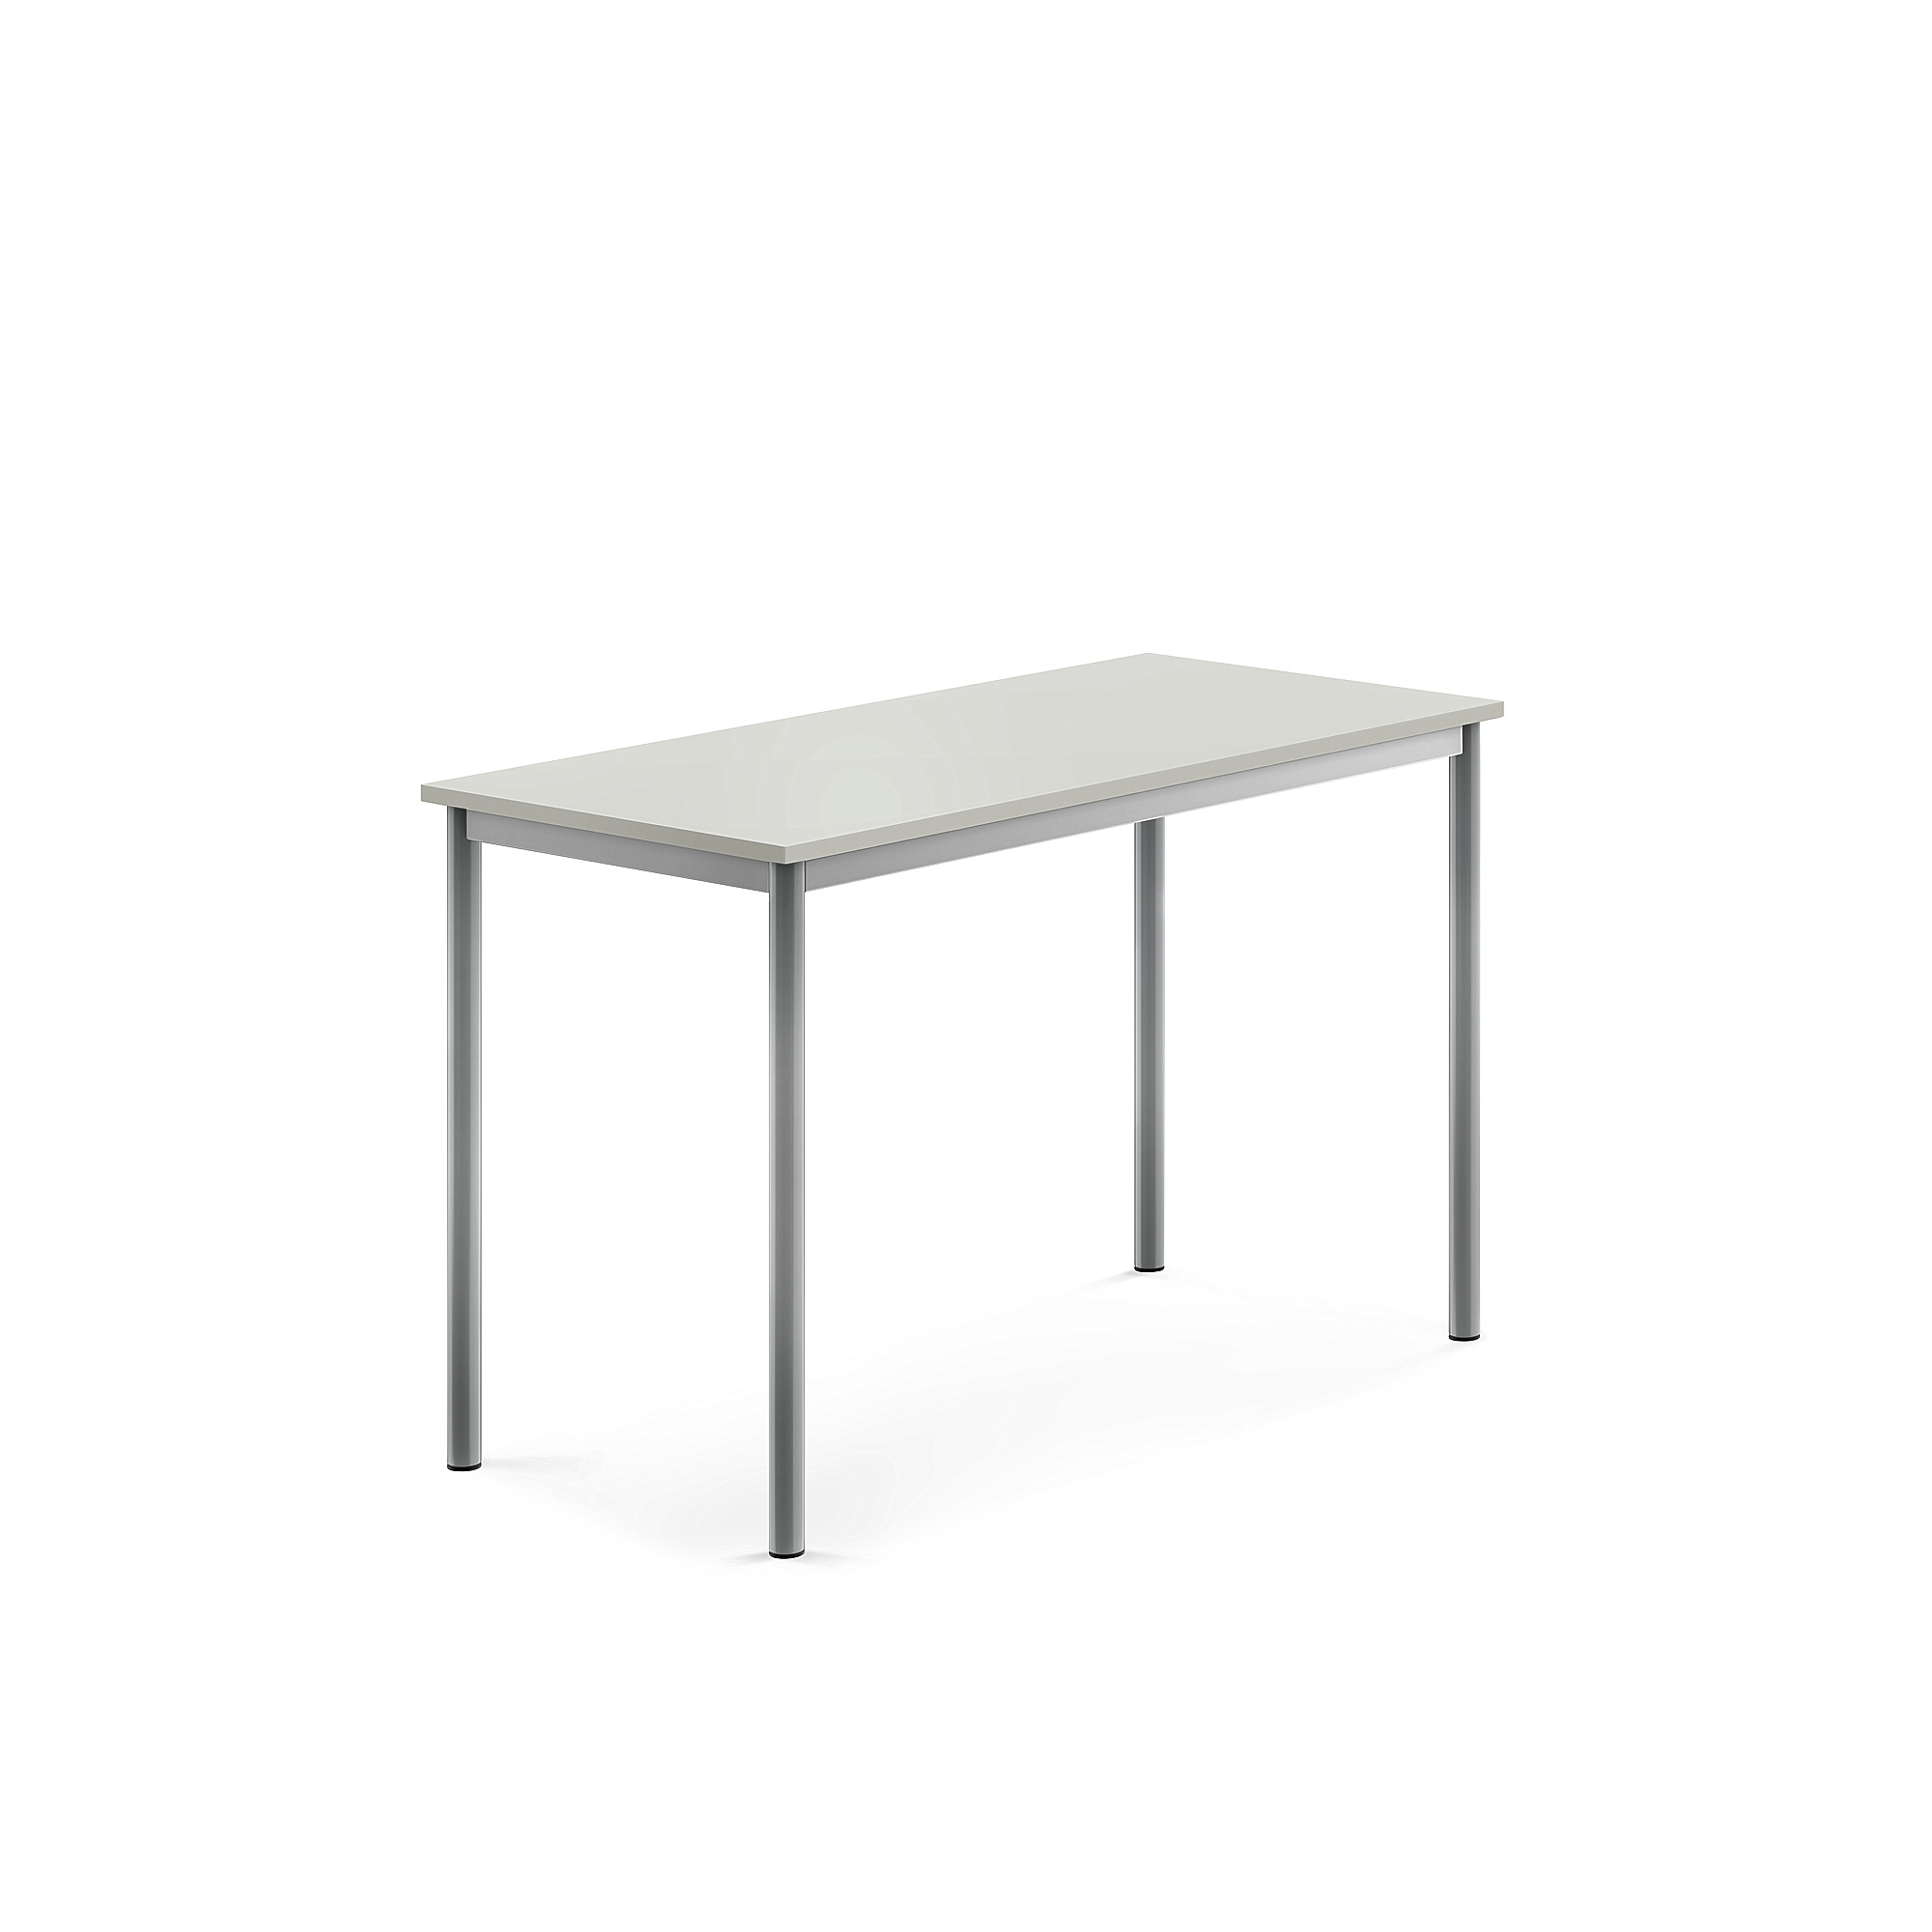 Stůl SONITUS, 1200x600x760 mm, stříbrné nohy, HPL deska tlumící hluk, šedá